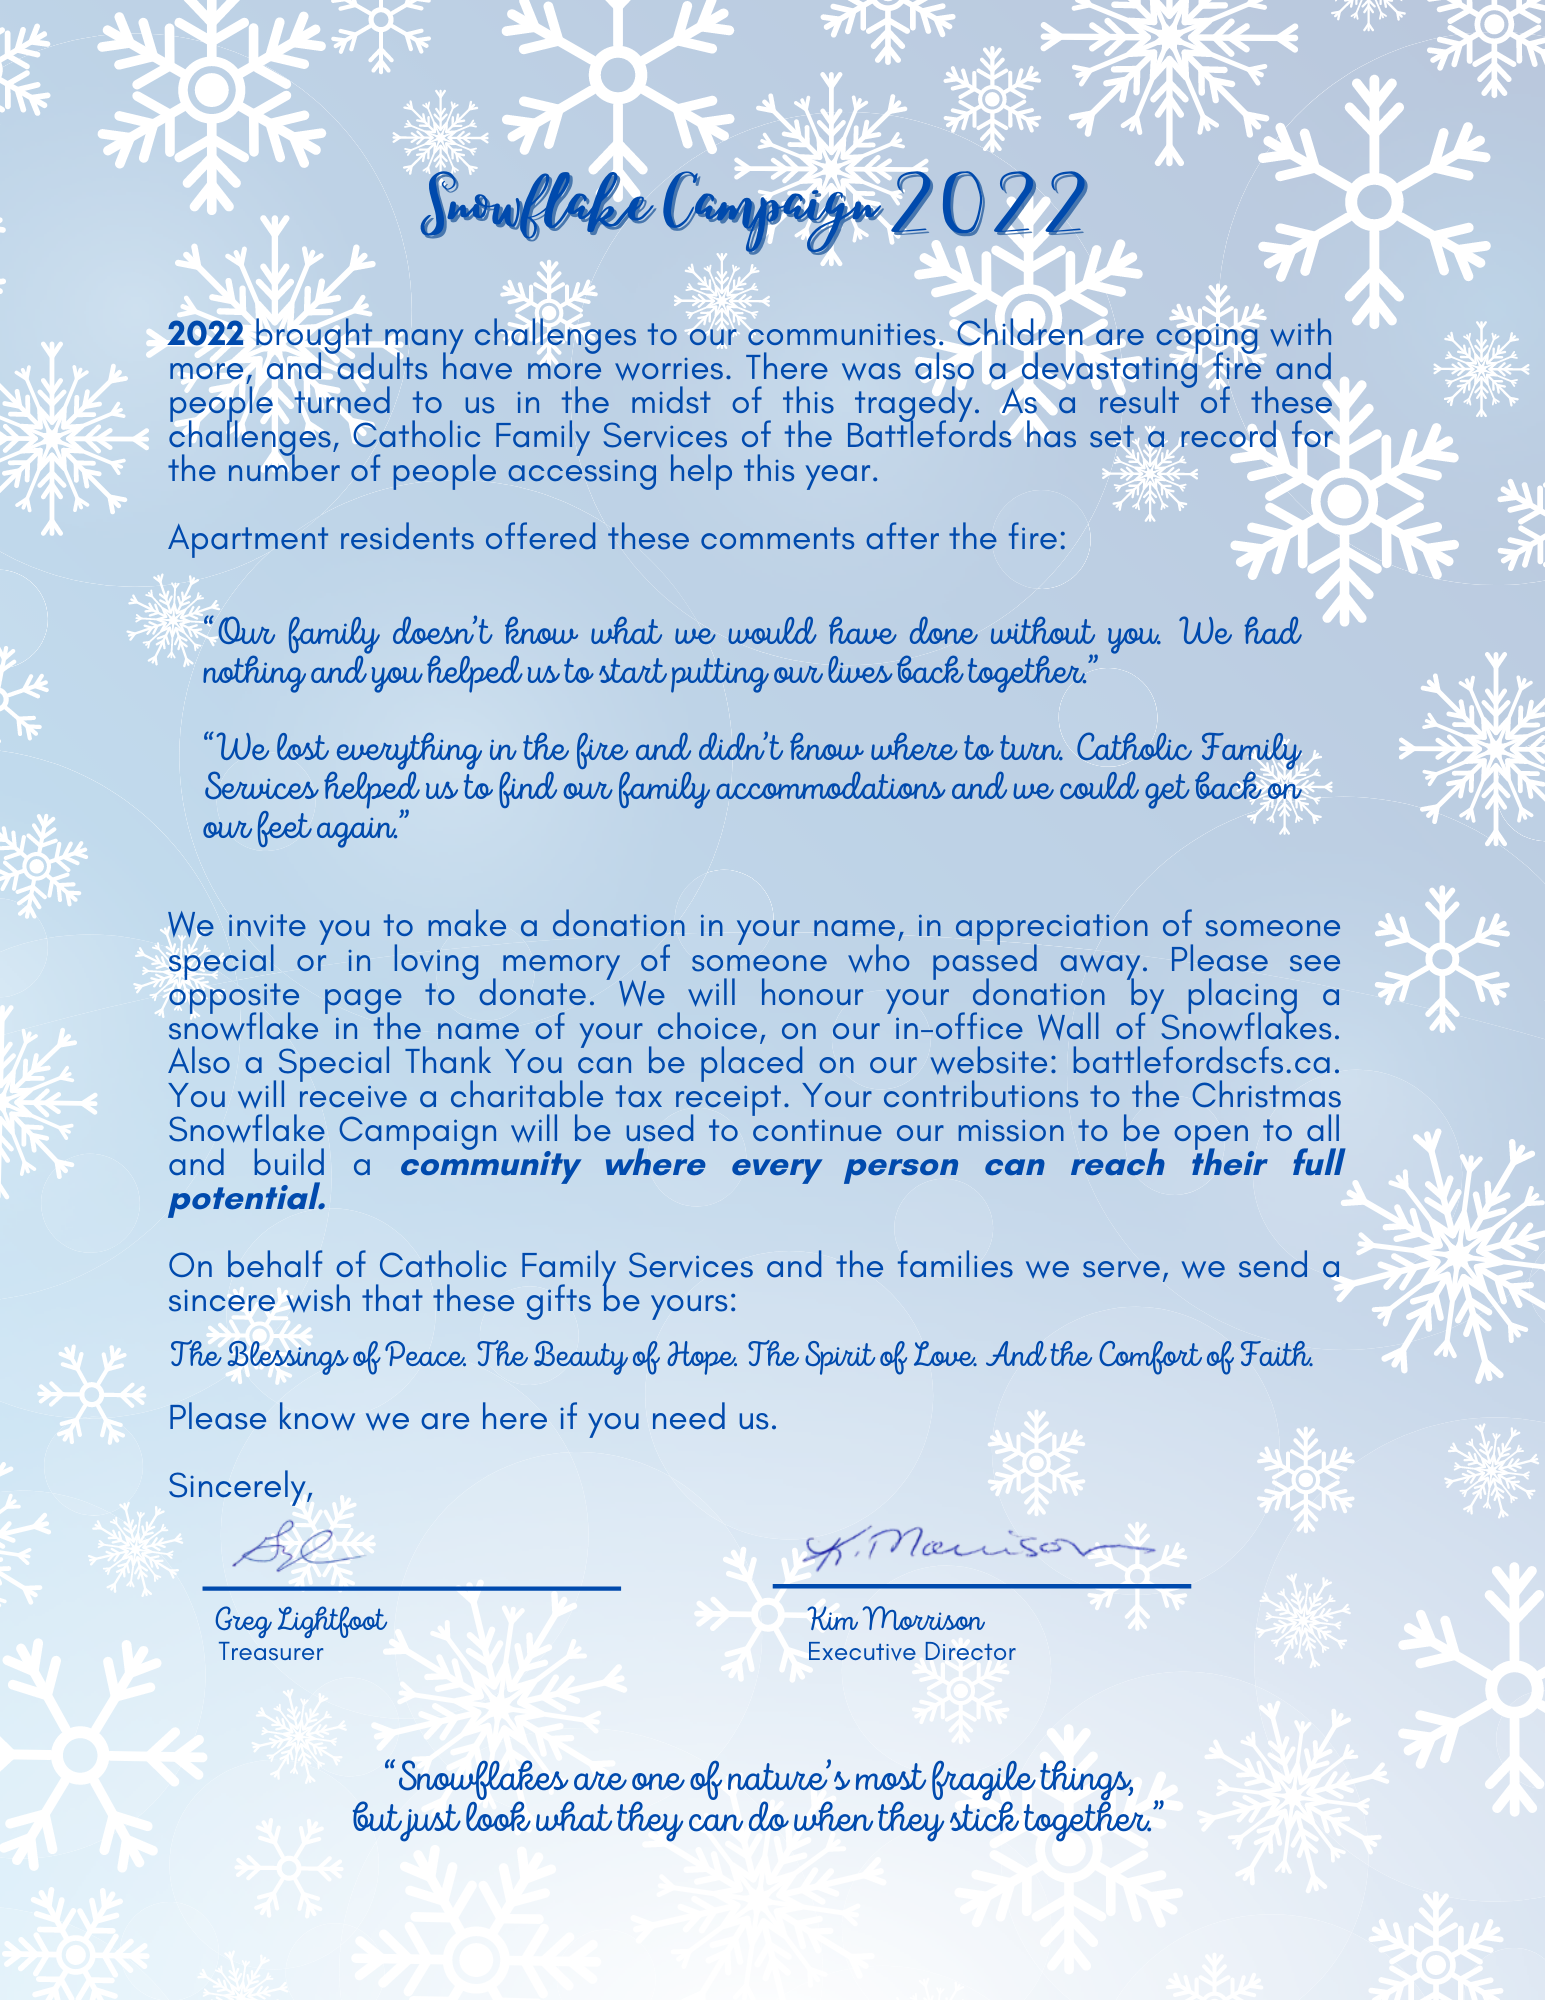 Snowflake Campaign Letter 